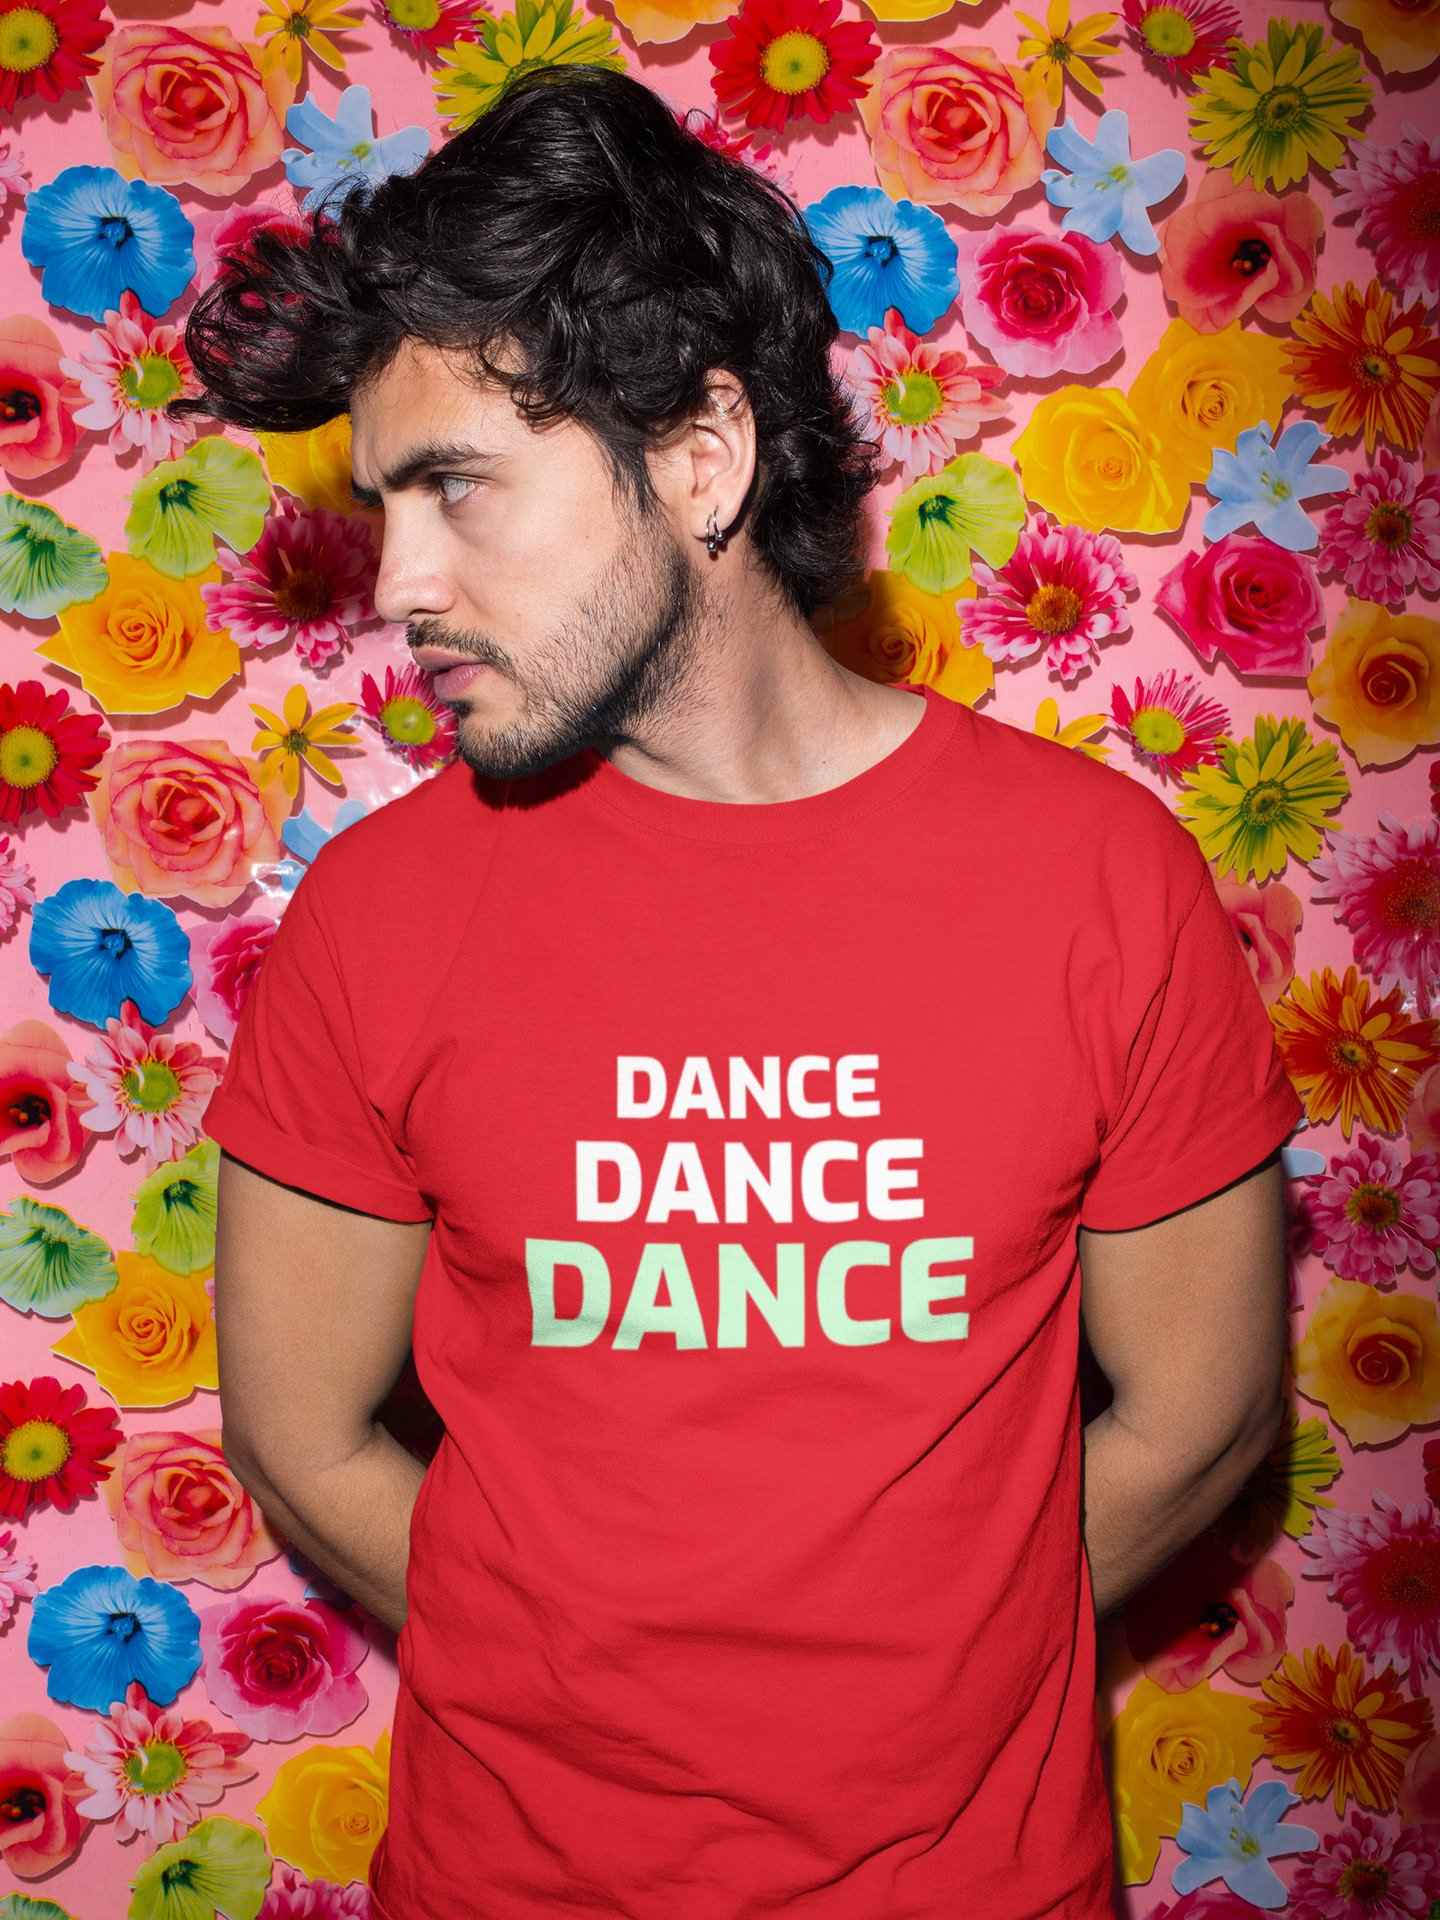 “dance-3” men’s half-sleeves t-shirts